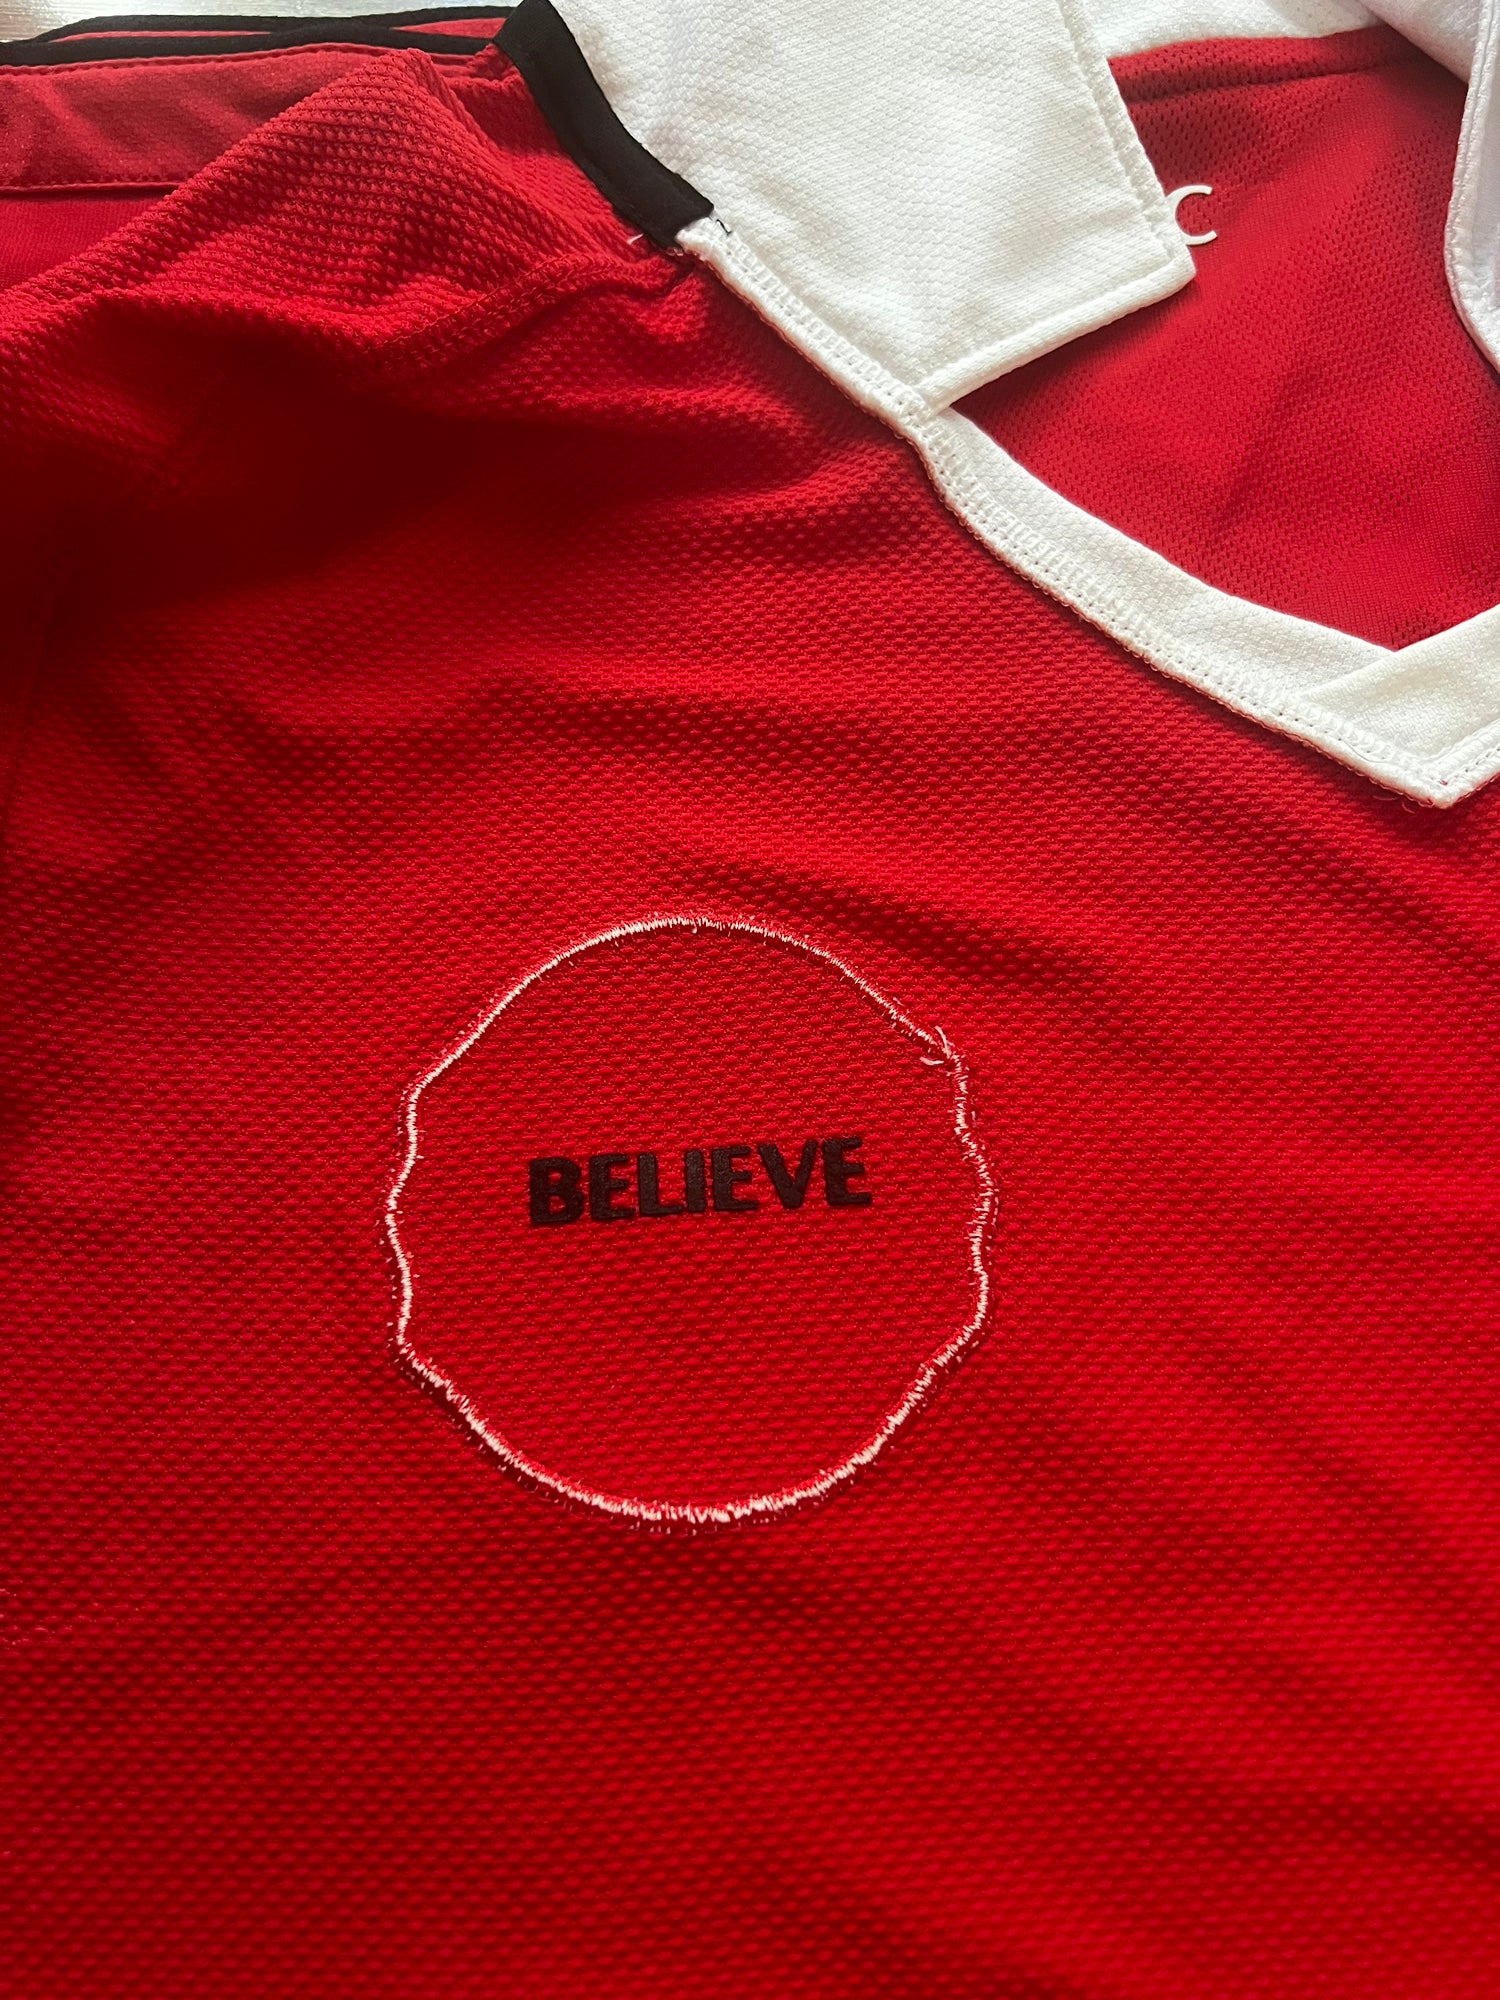 Original Manchester United Retro Jersey in Ikorodu - Clothing